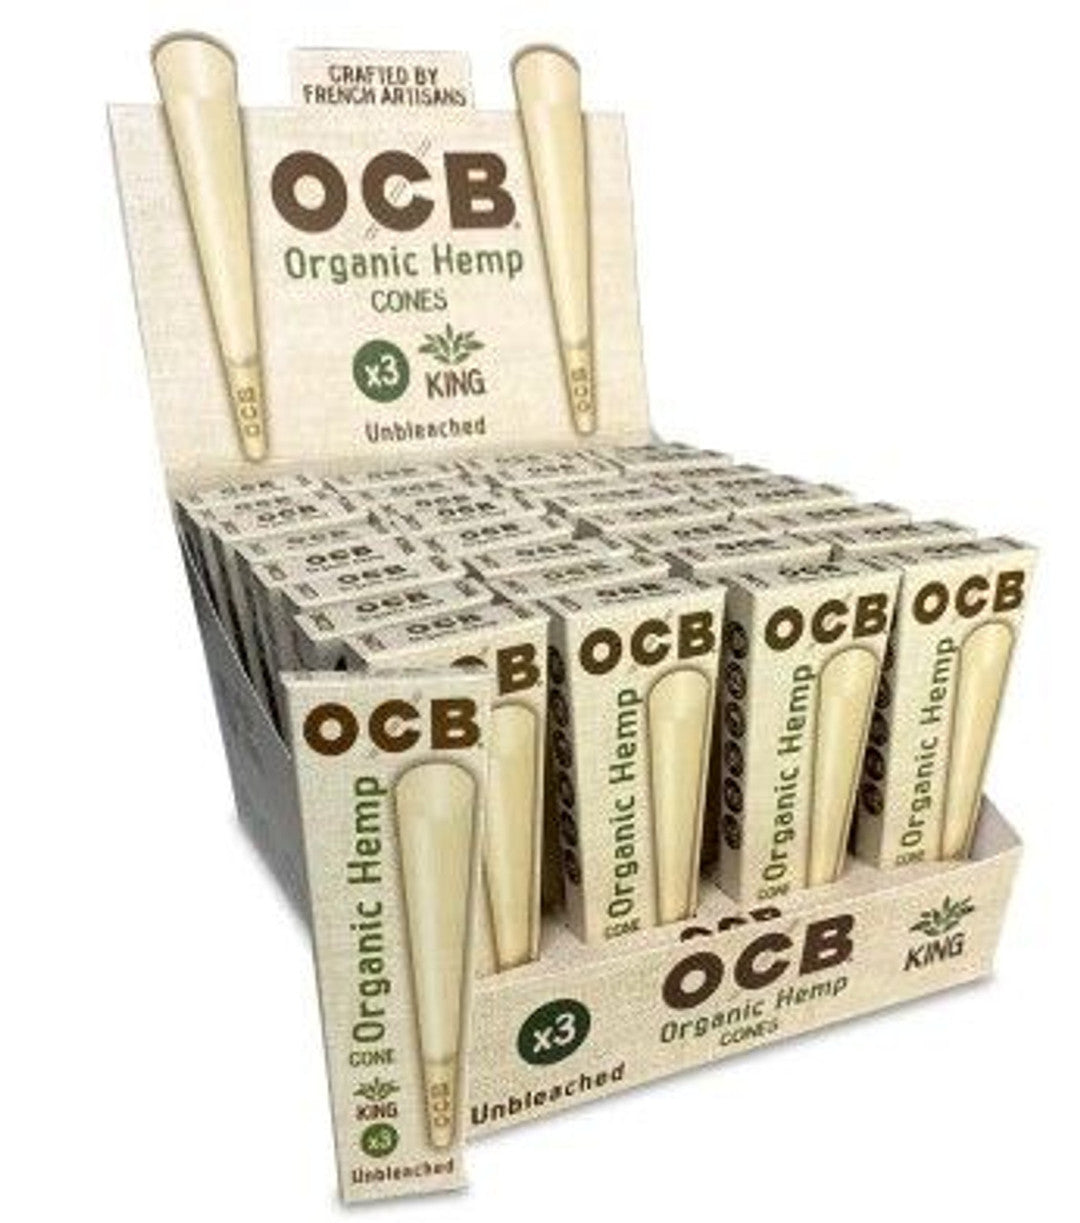 OCB Organic Hemp Cones - The Olde Lantern